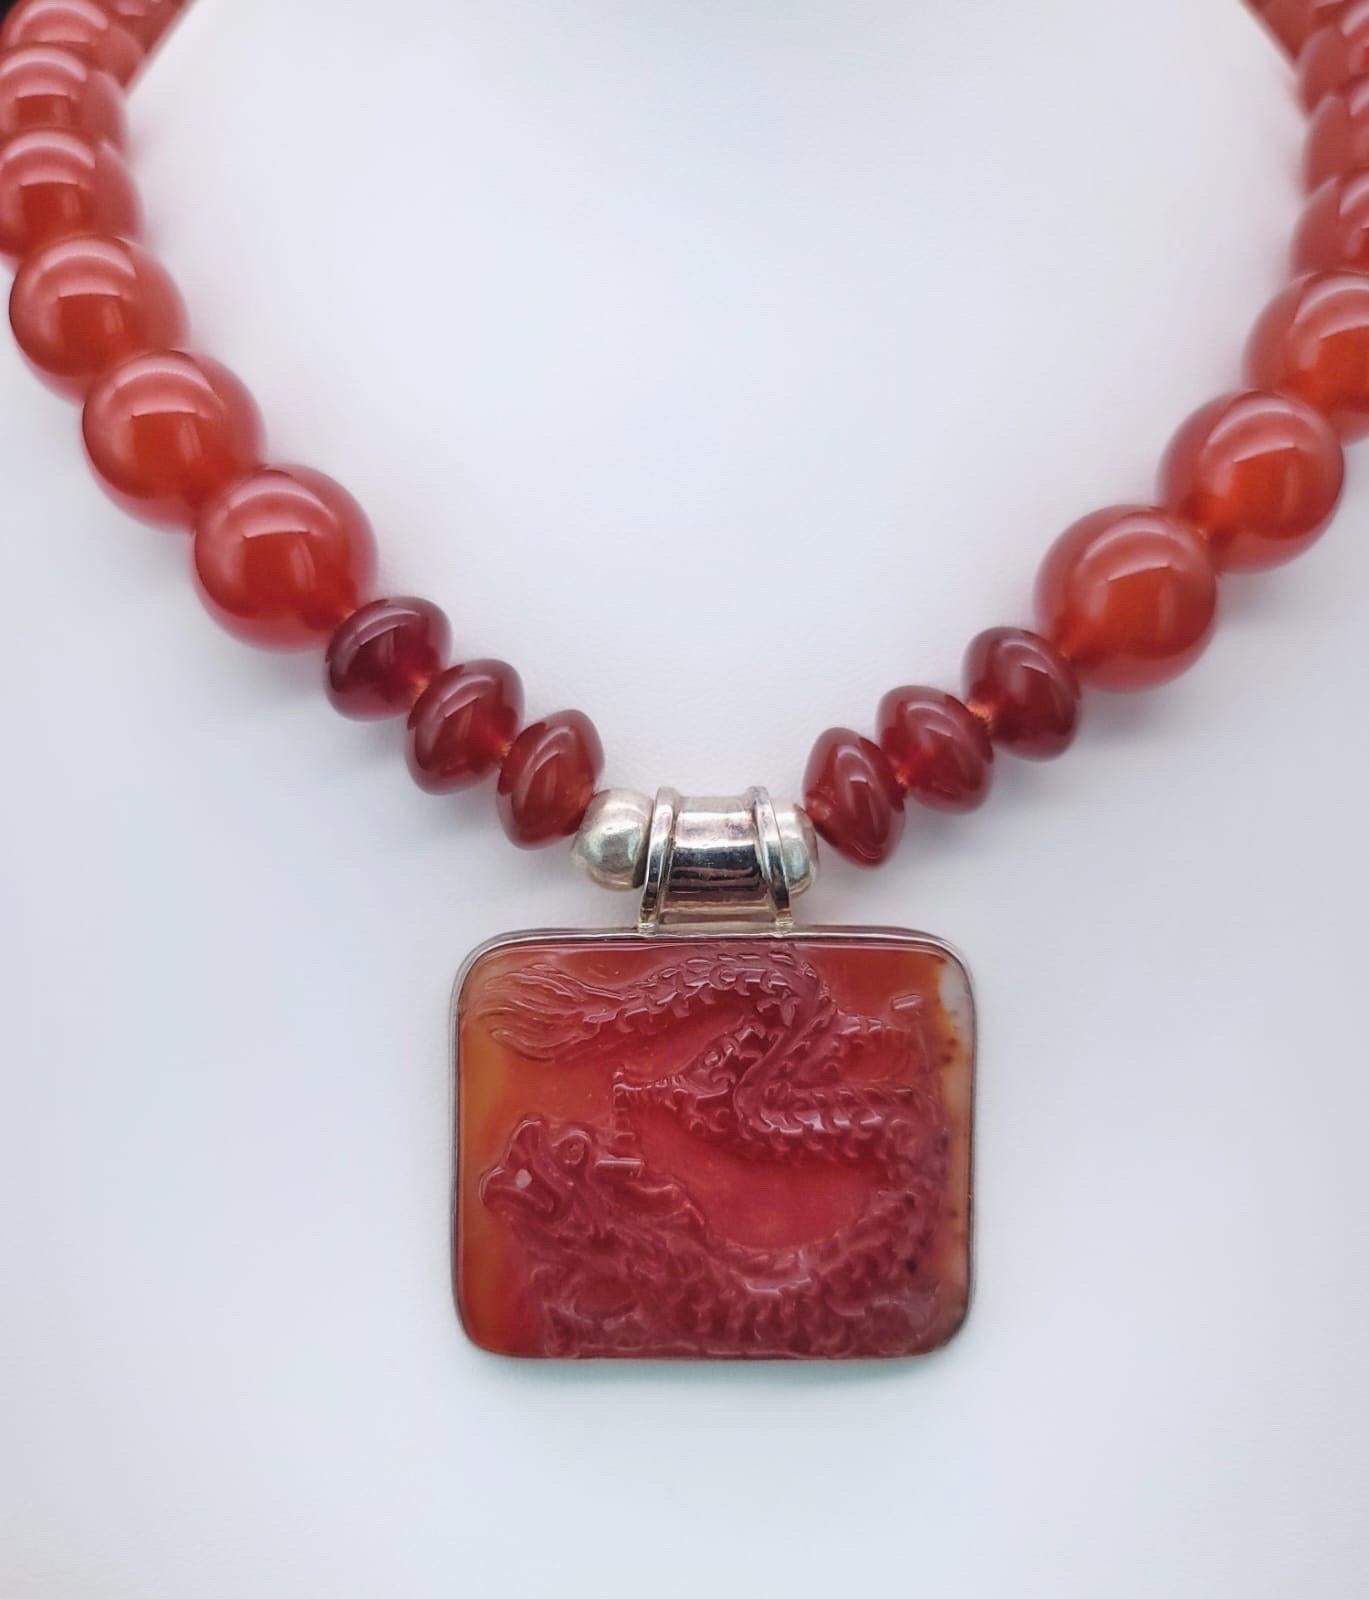 Women's A.Jeschel Powerful Carnelian necklace with a Dragon pendant. For Sale